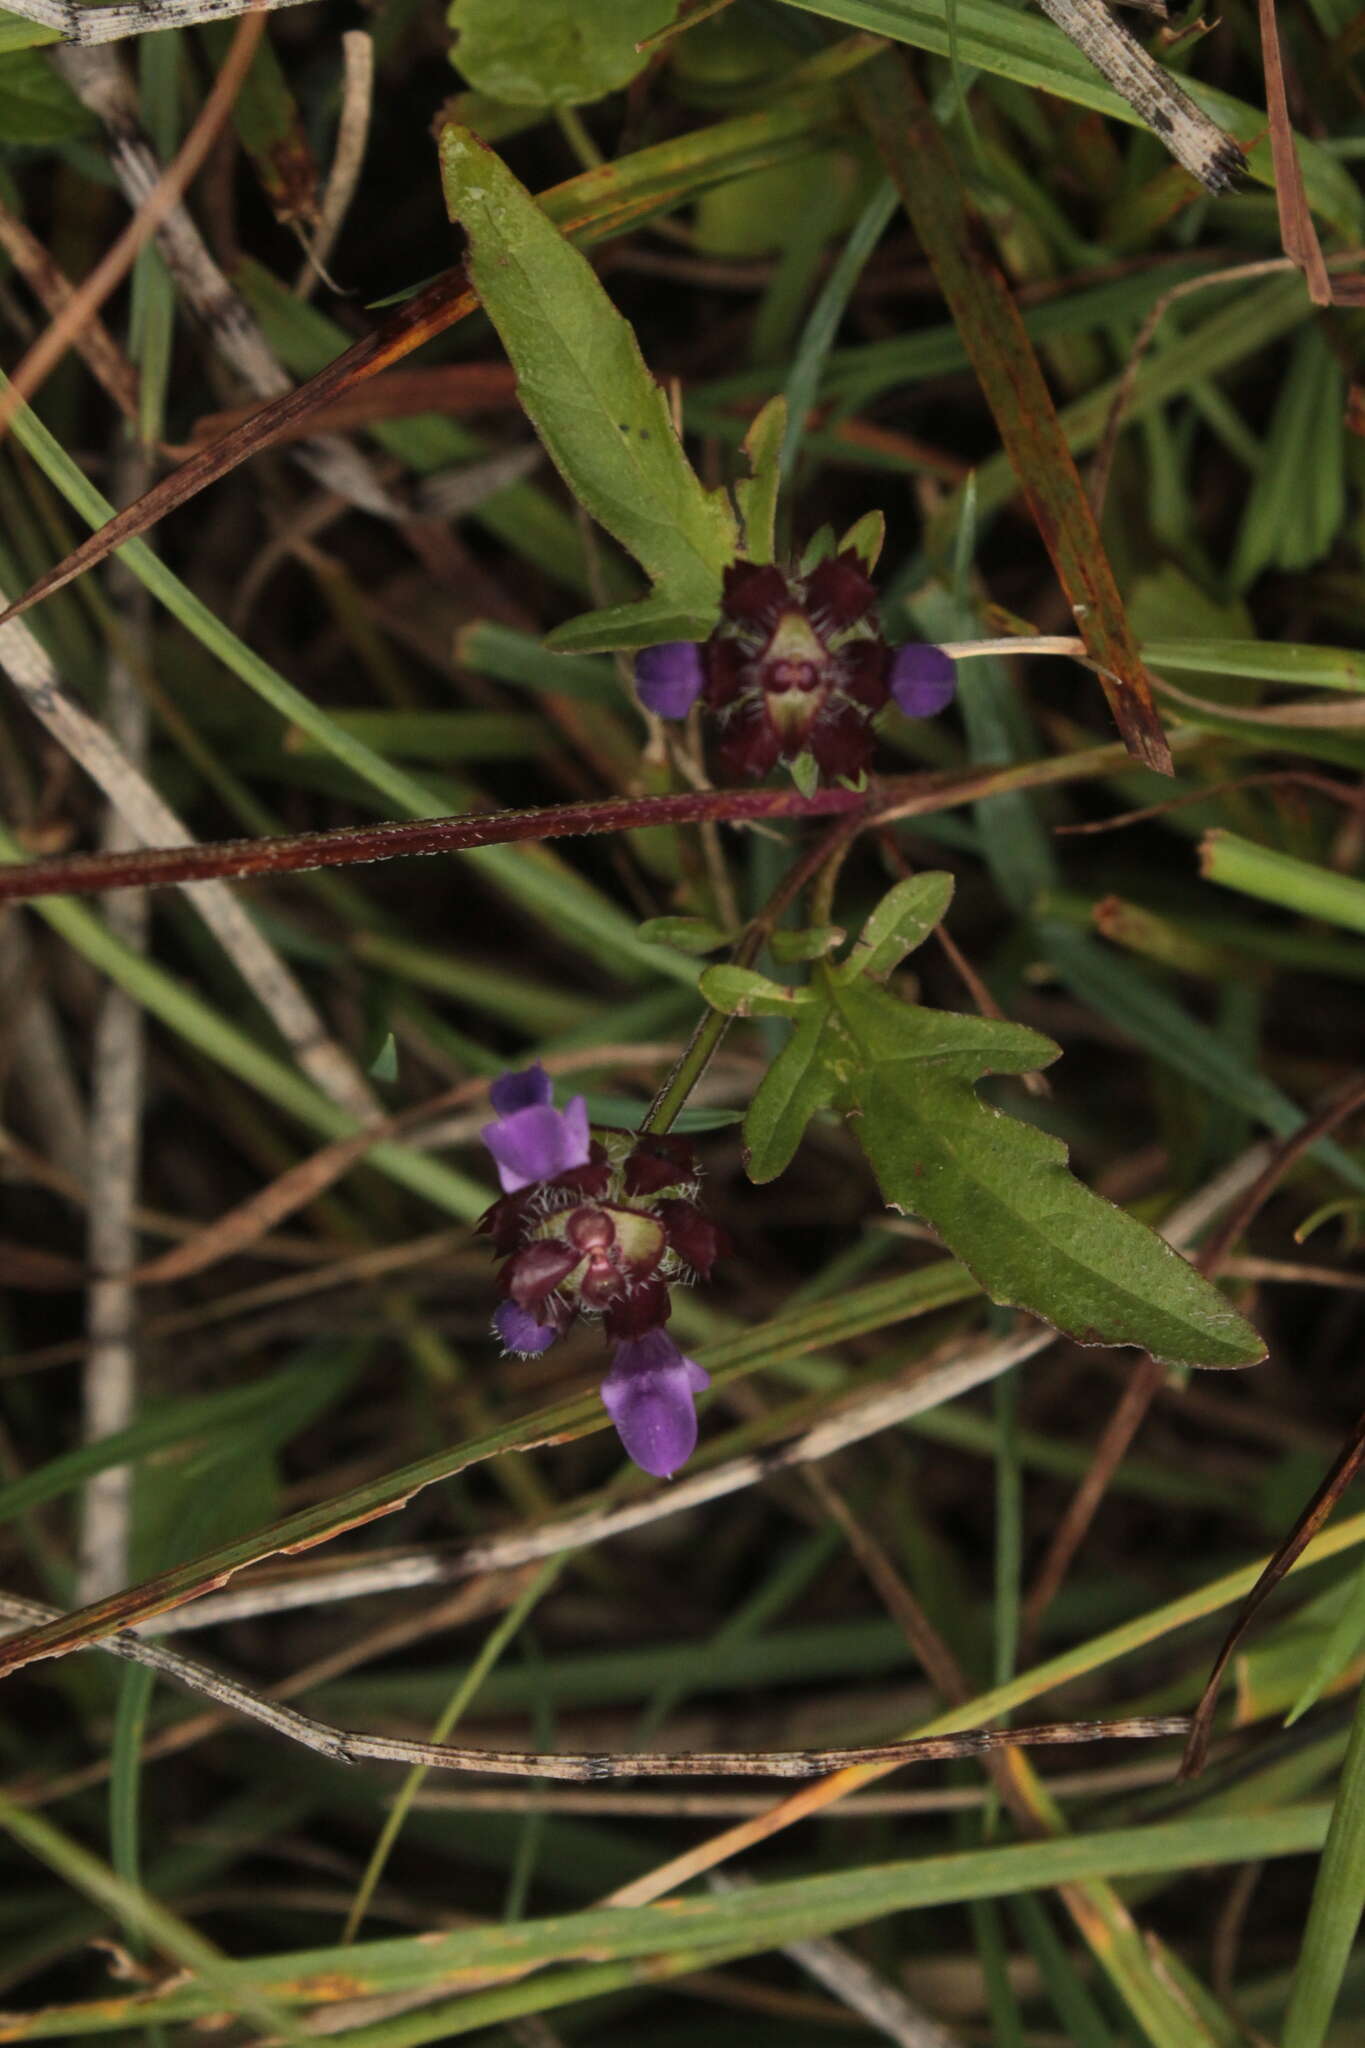 Image of Prunella bicolor Beck